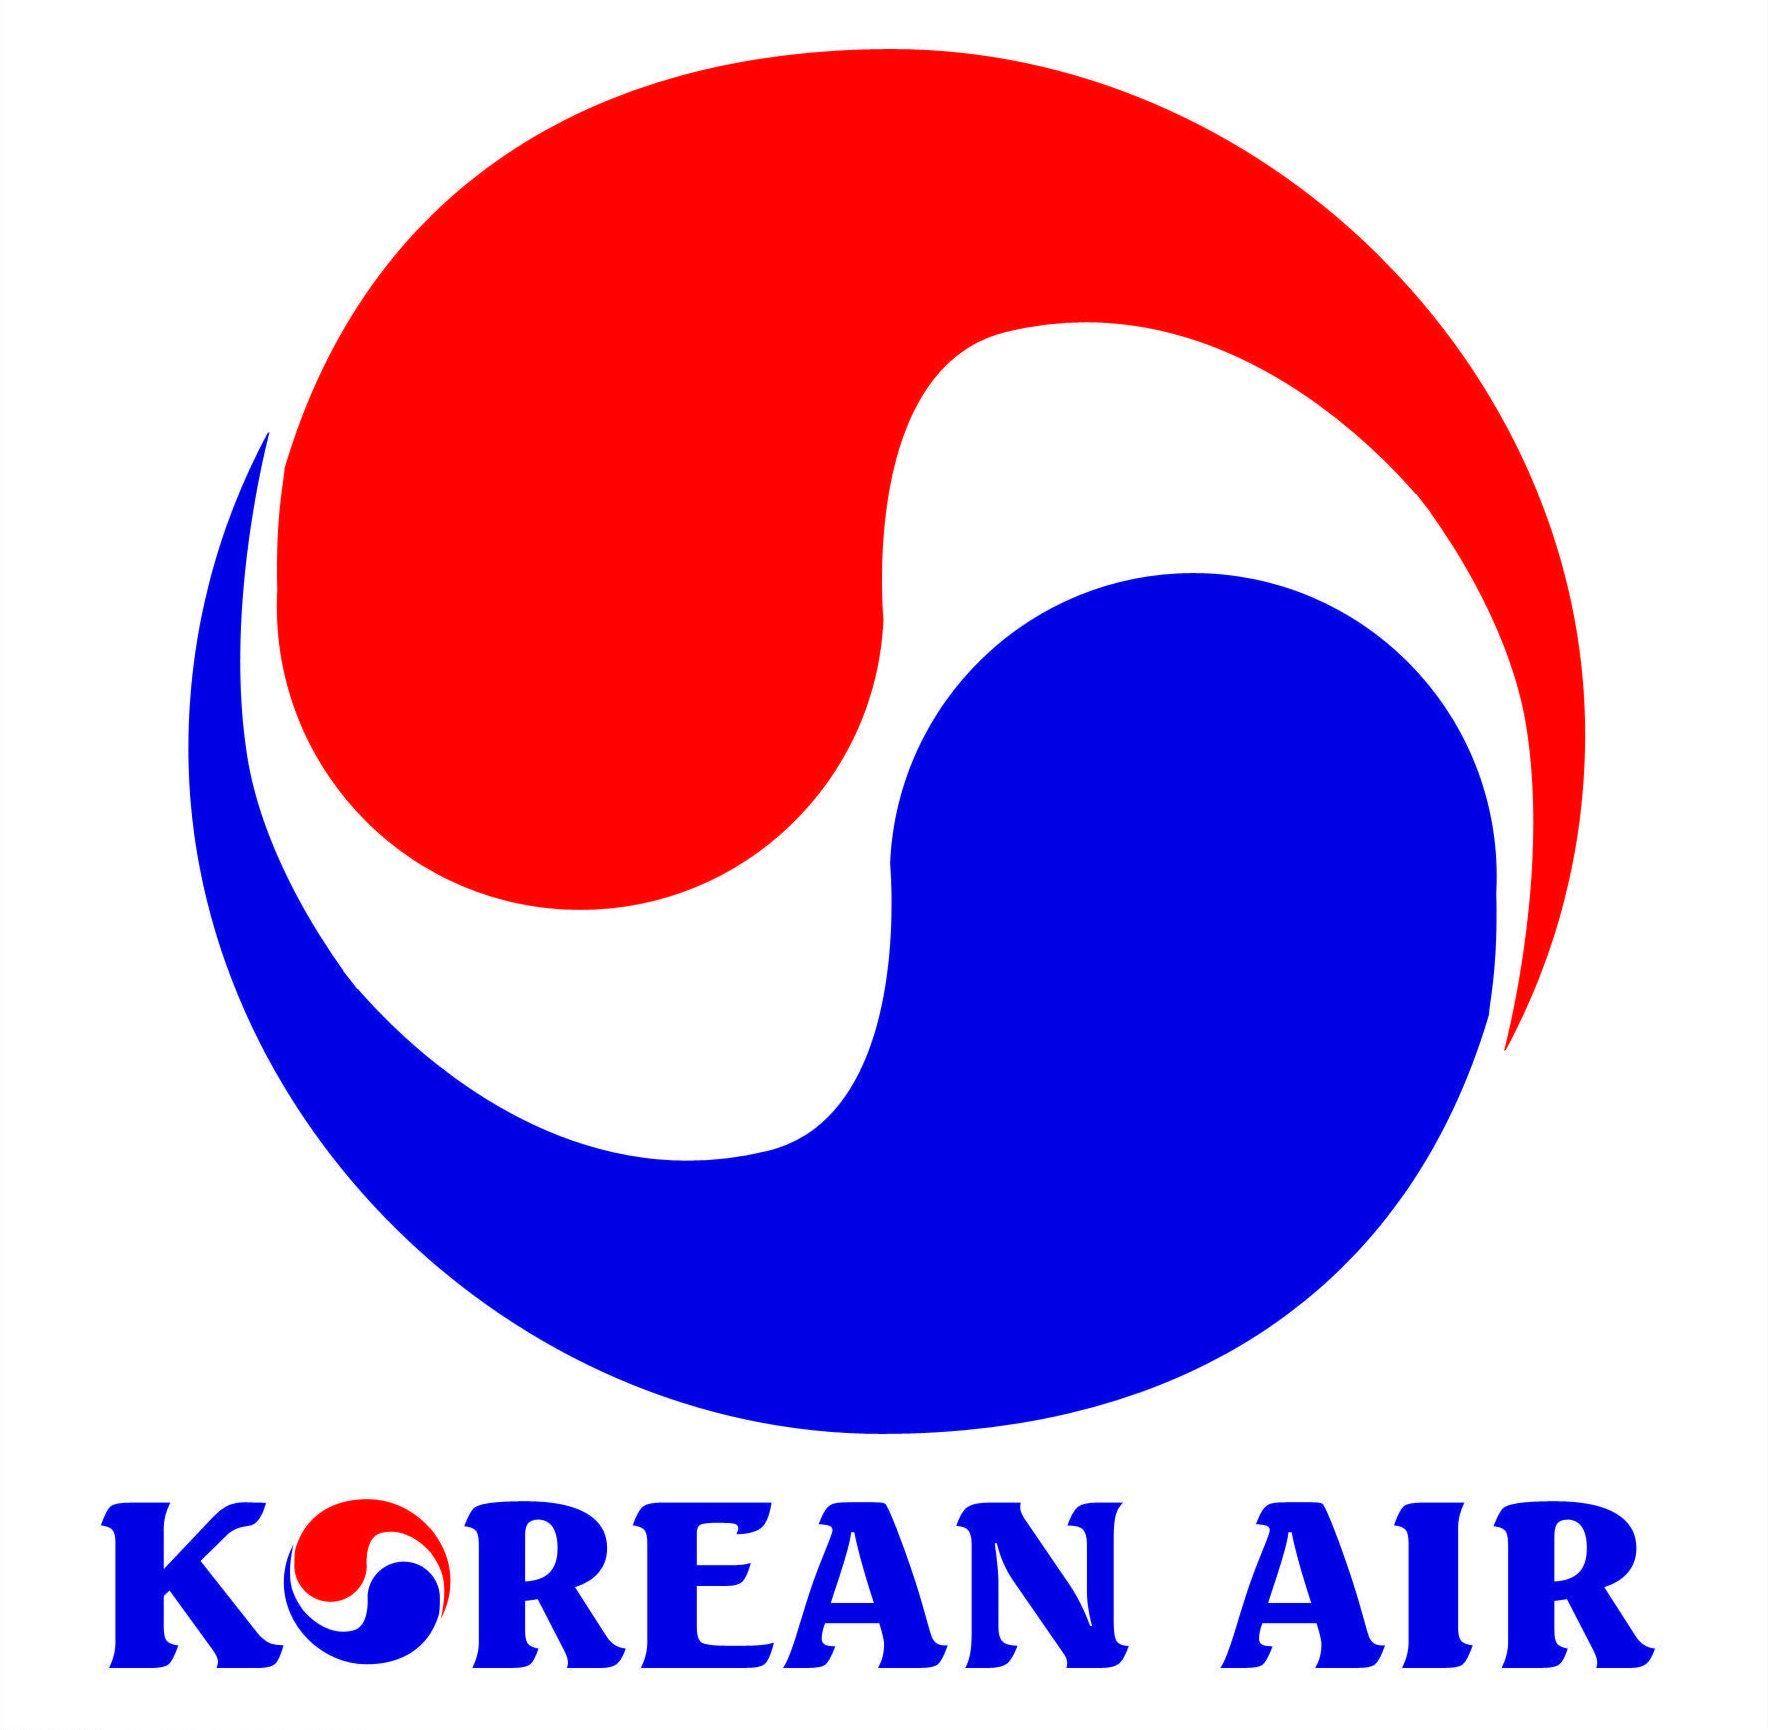 South Korean Logo - Korean Air (South Korean airline) | ctc presentation | Airline logo ...